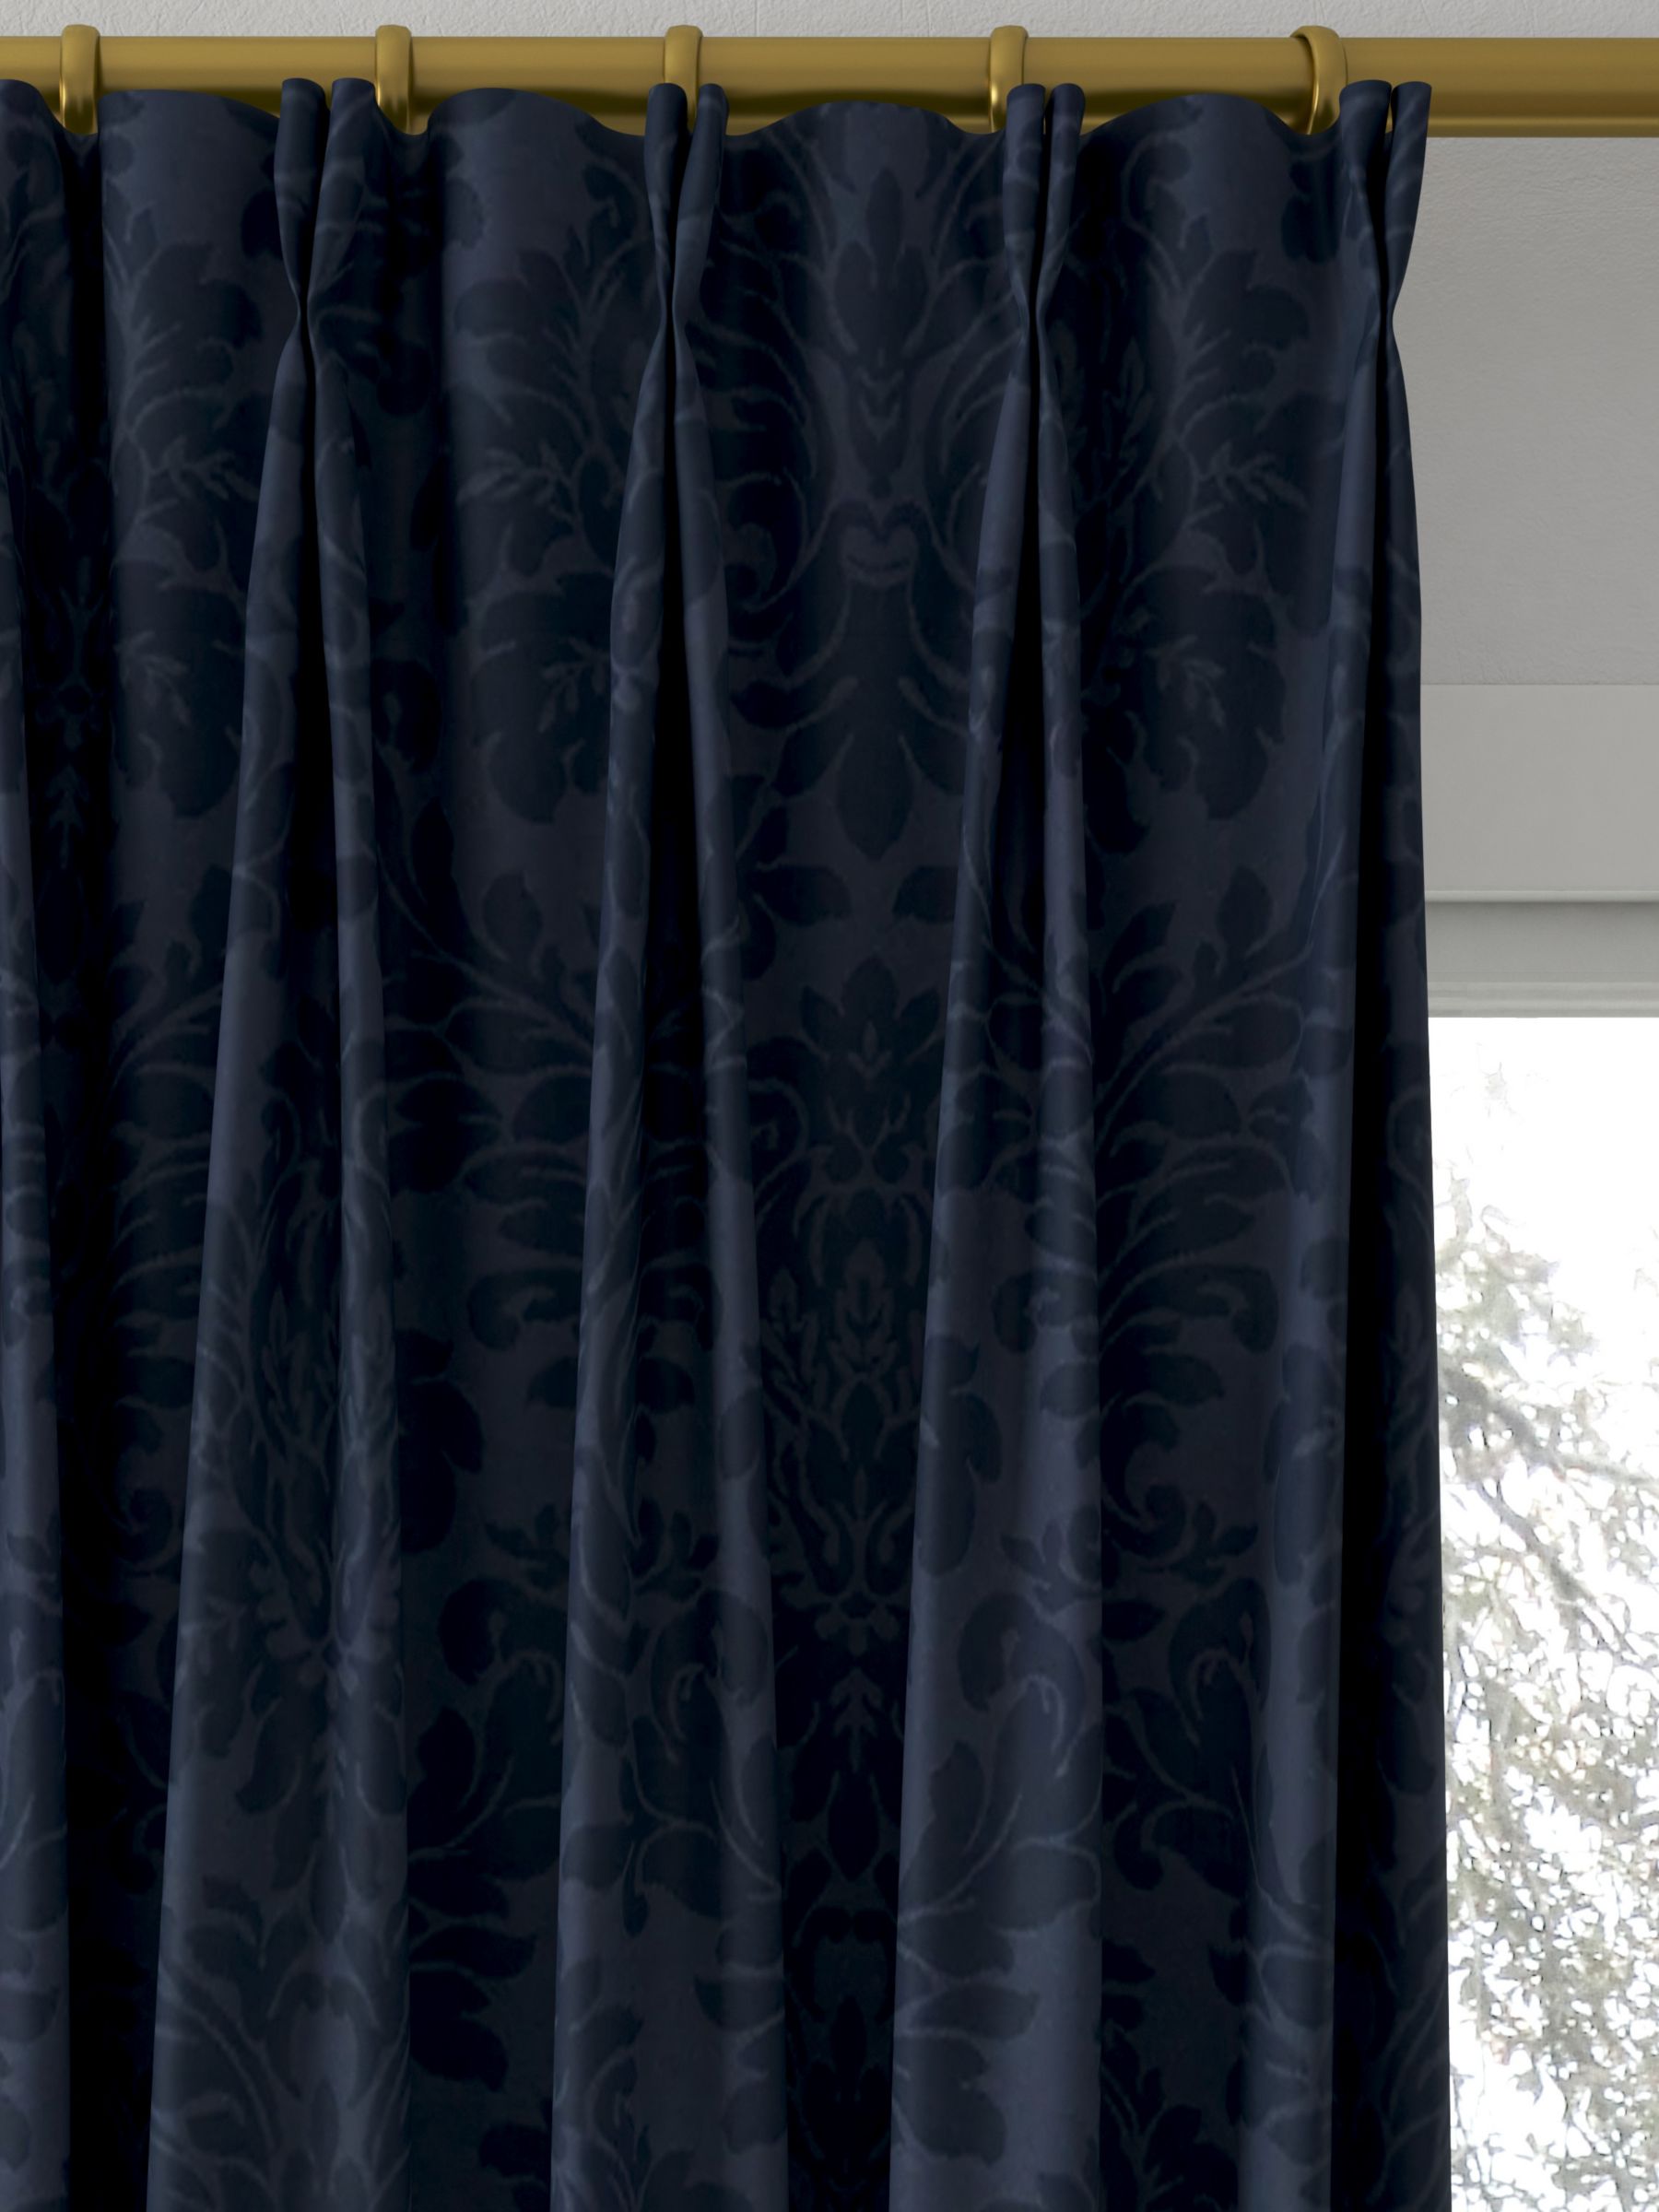 Sanderson Lymington Damask Made to Measure Curtains, Indigo